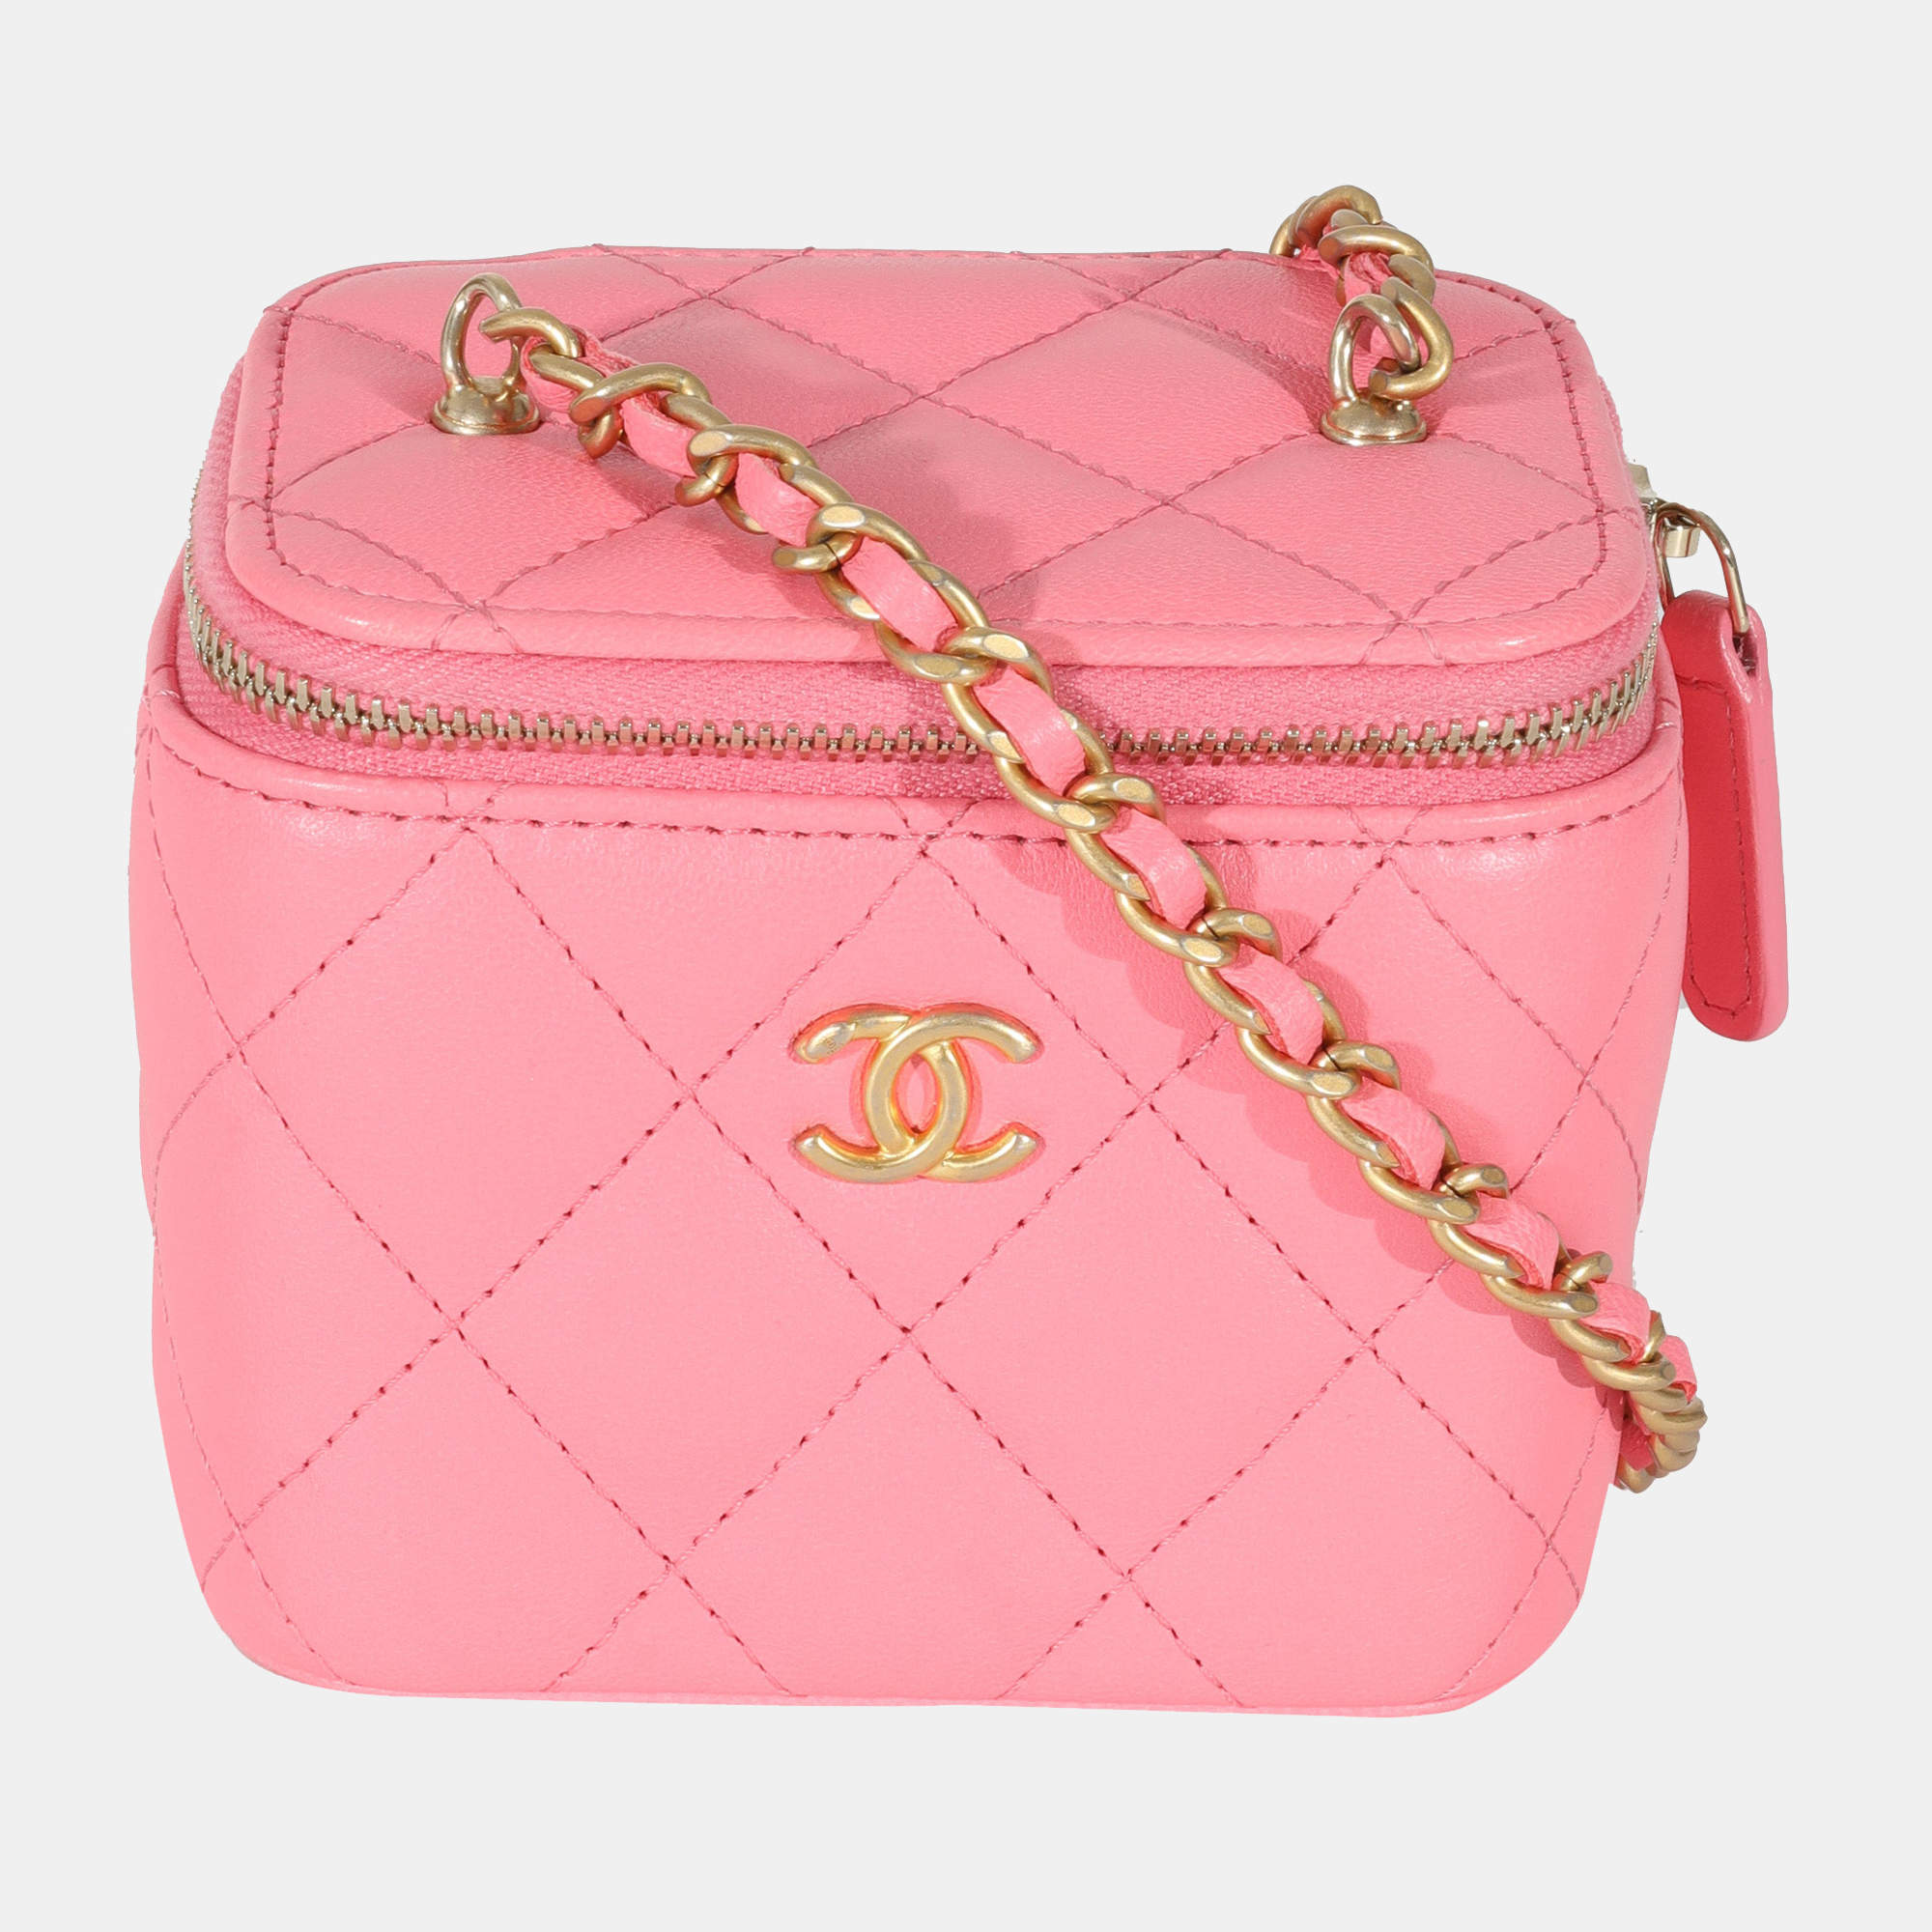 chanel mini pink case